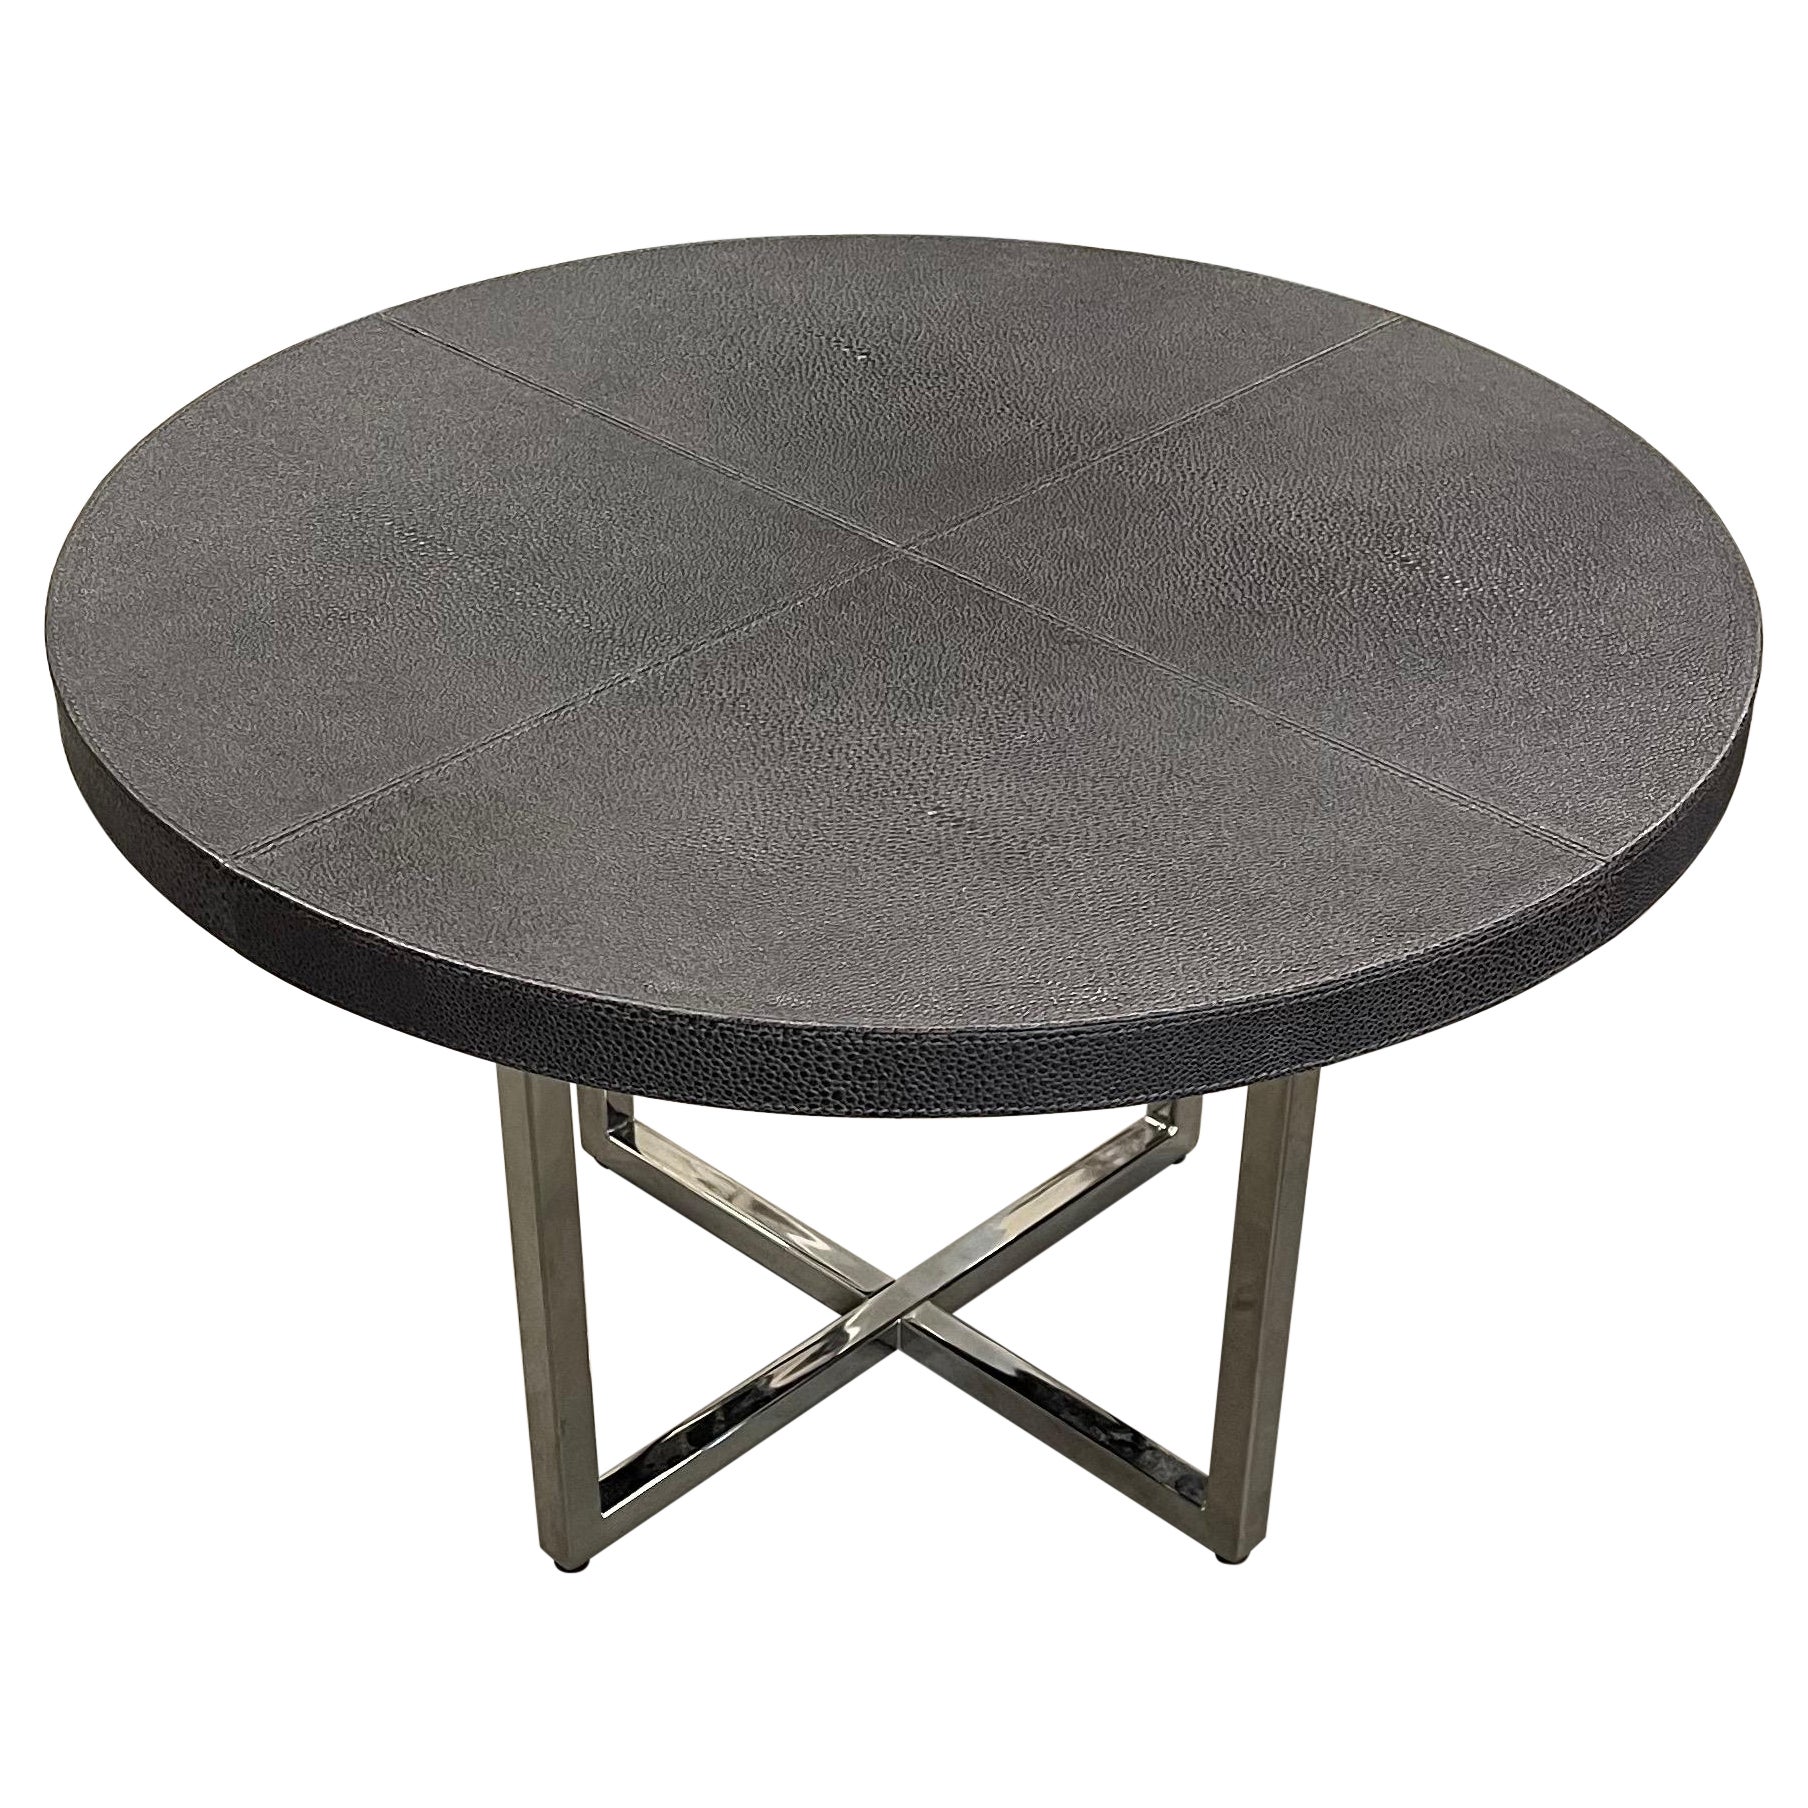 Fendi Casa Shagreen Leather Top Table